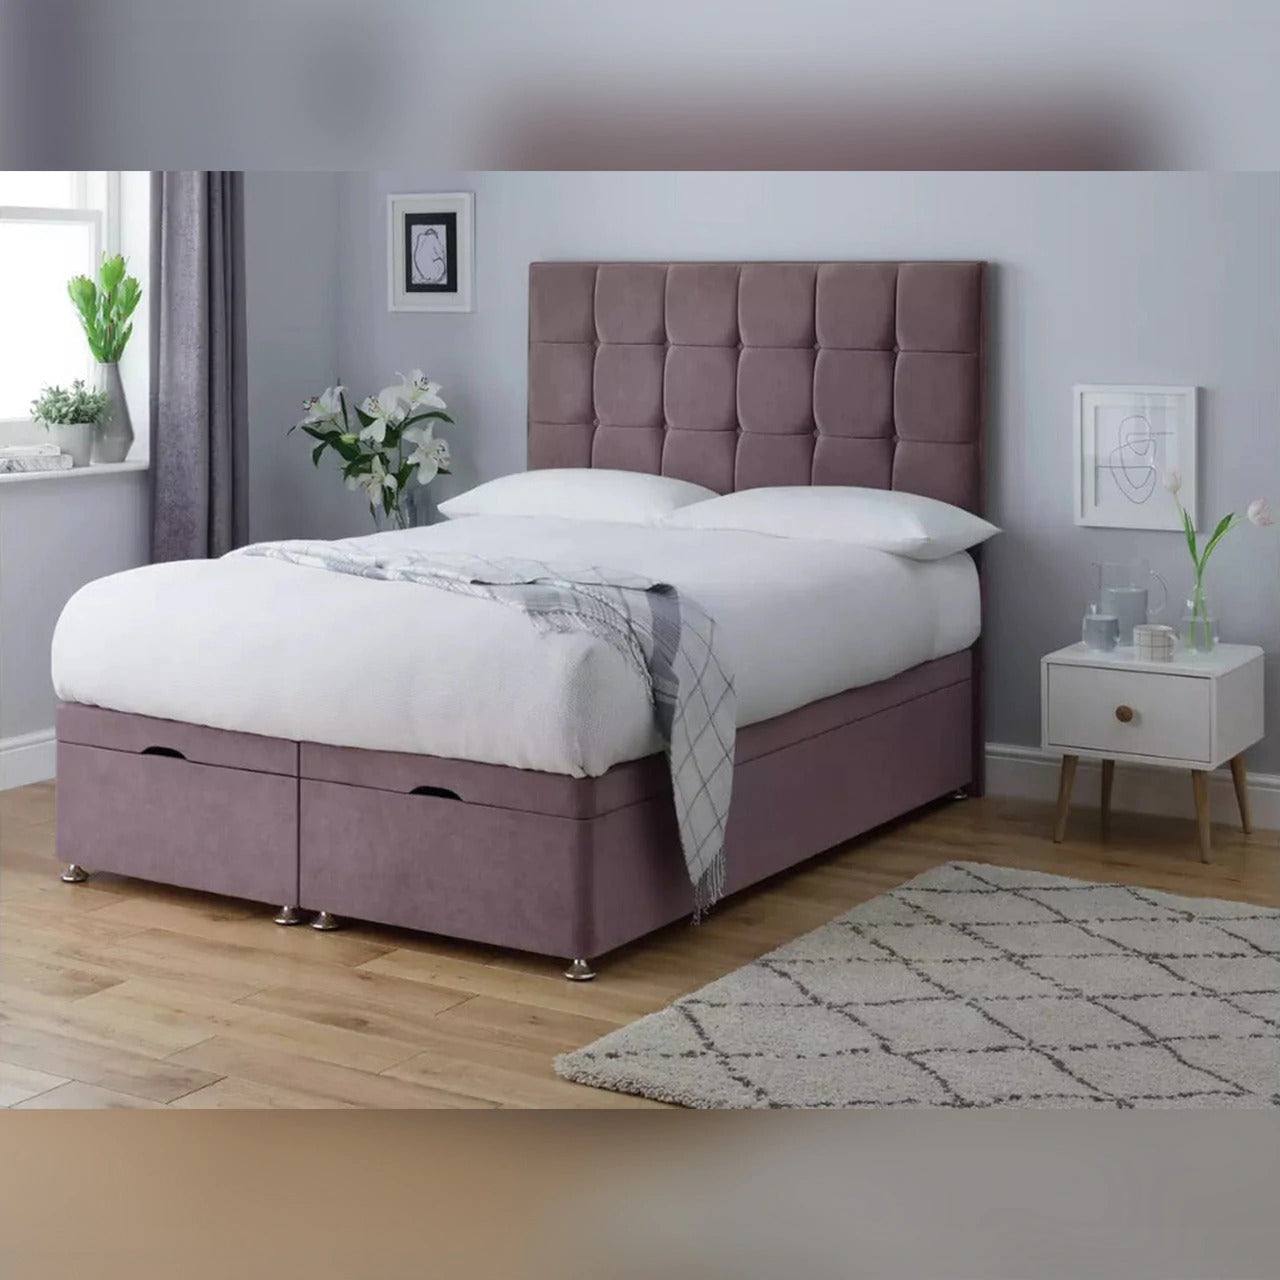 Hydraulic Beds, Hydraulic Storage Bed, King Size Bed With Hydraulic Storage, Hydraulic Bed Price